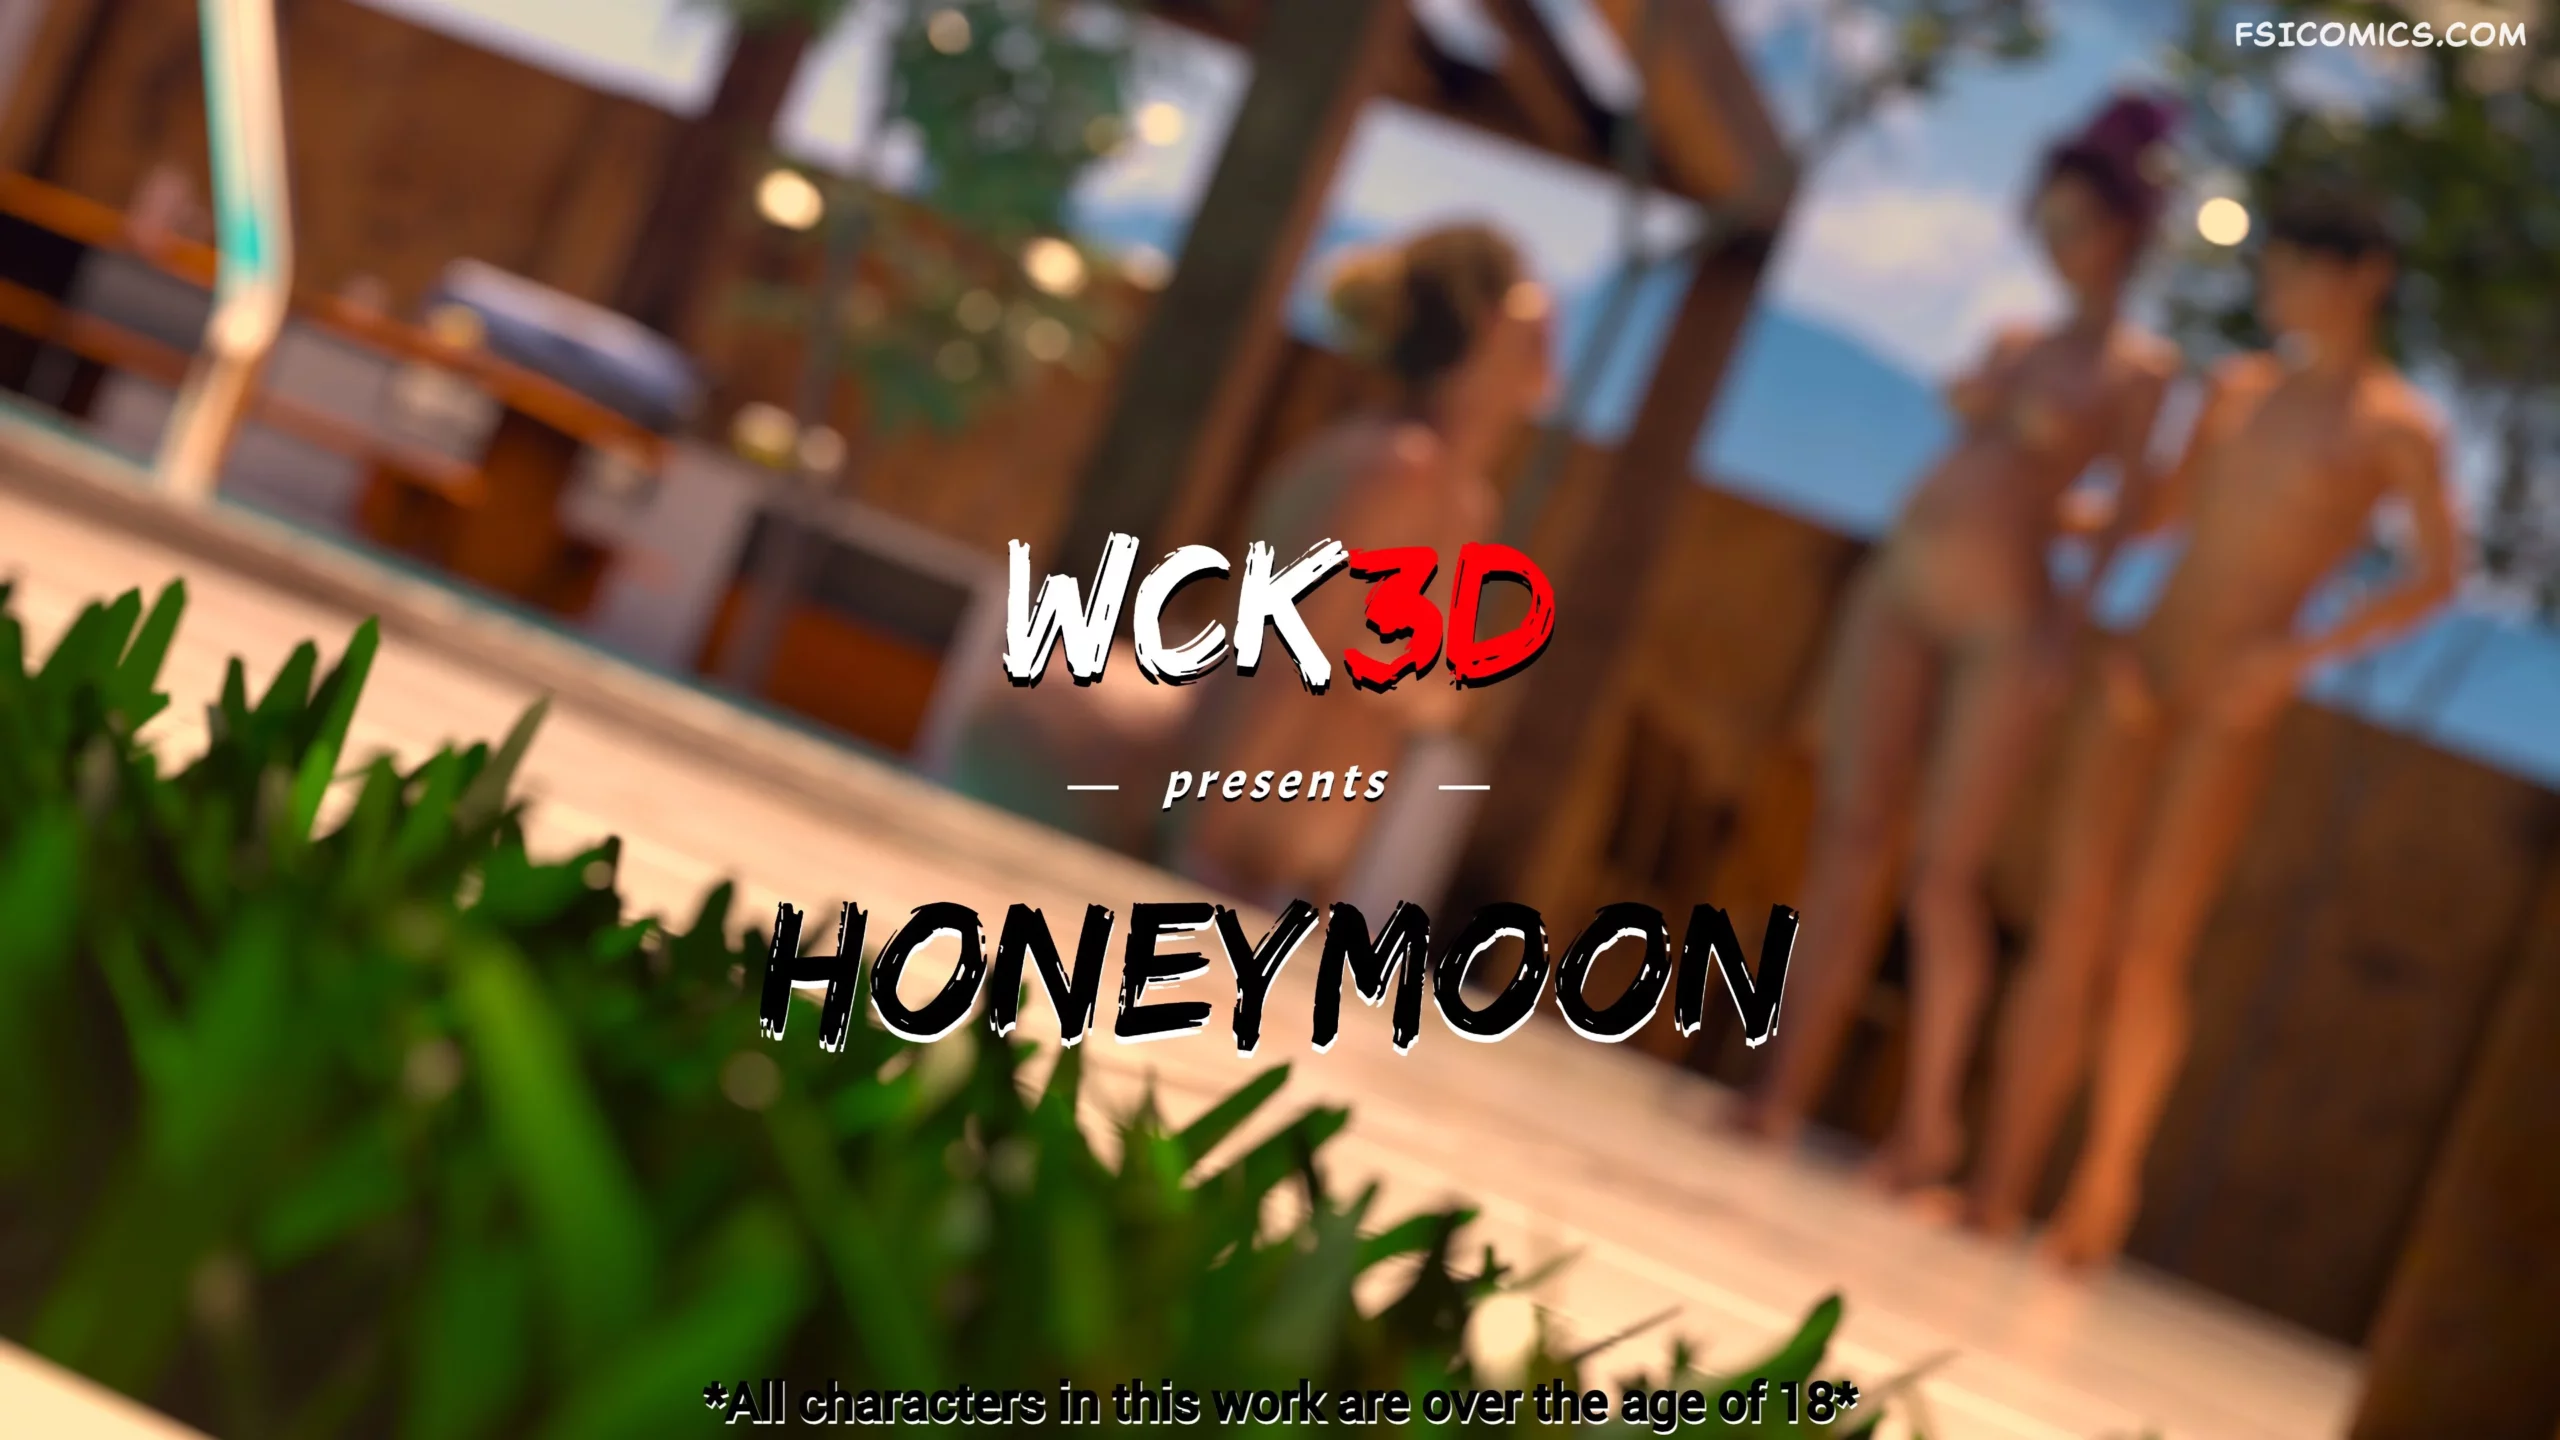 Between Us - Honeymoon - WCK3D - 361 - FSIComics